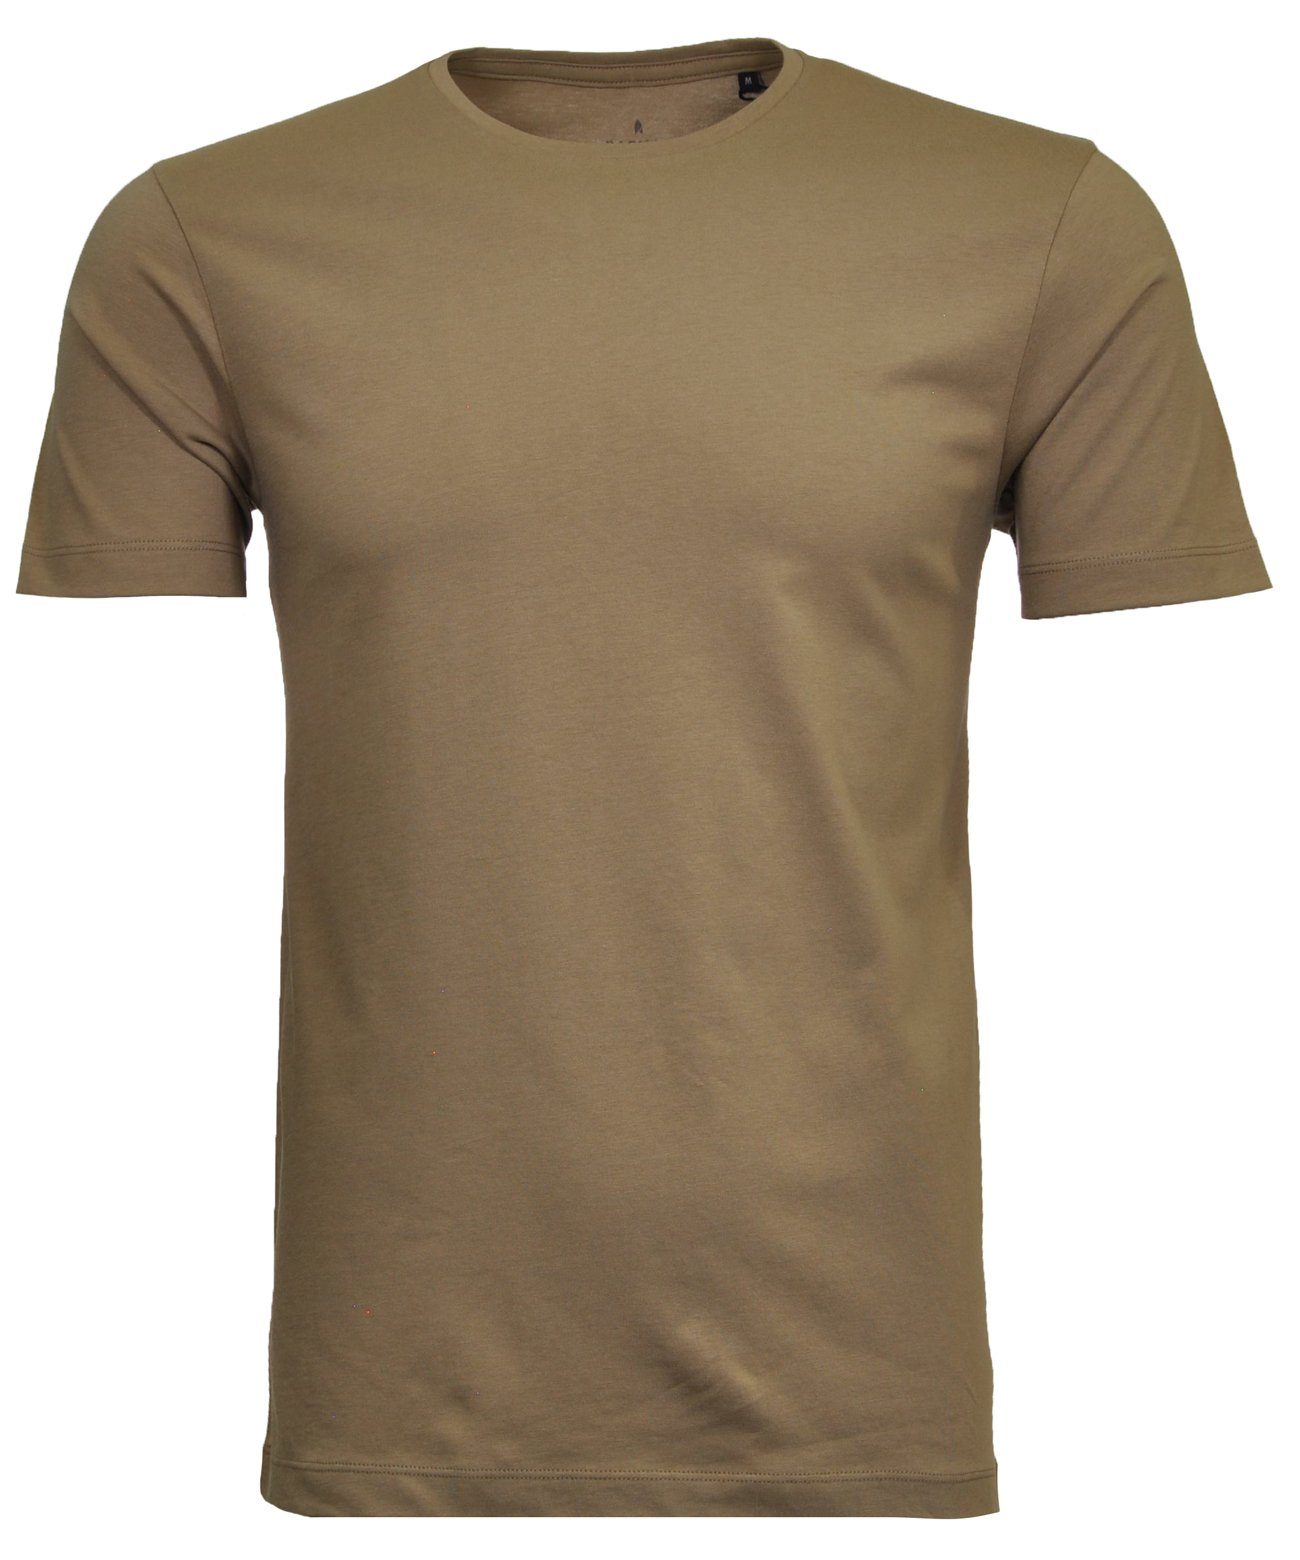 Kitt-881 RAGMAN T-Shirt